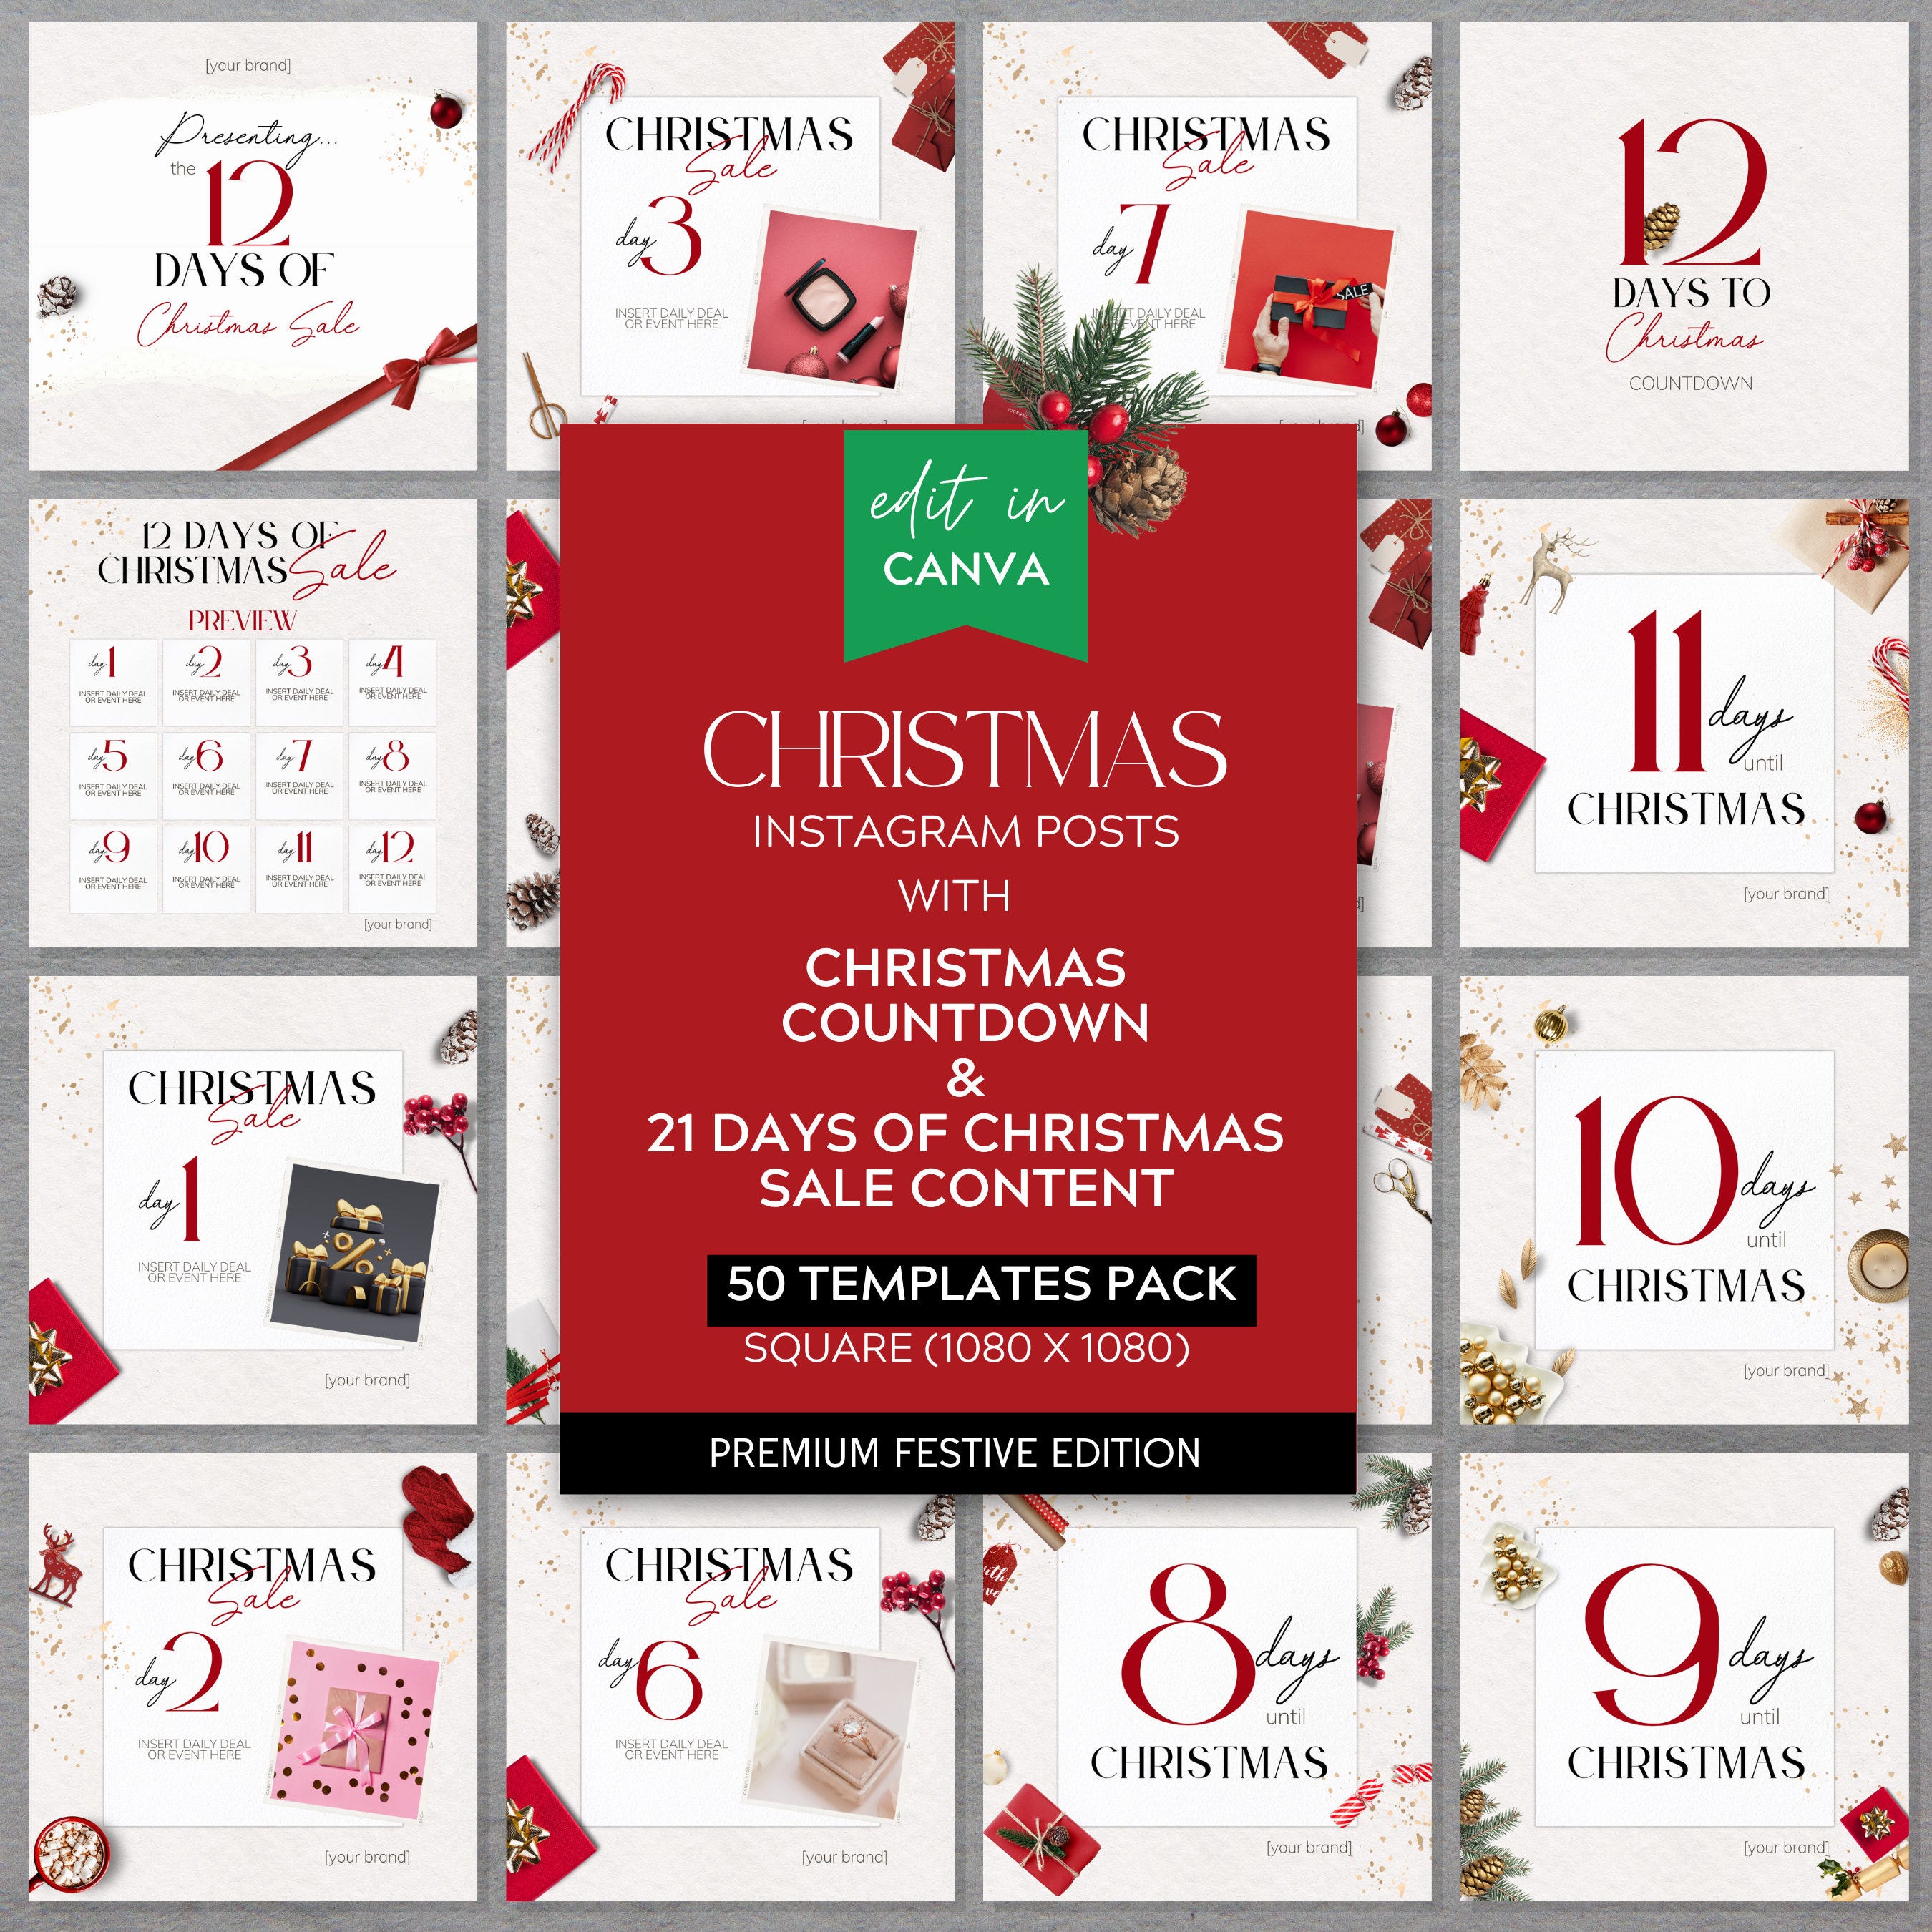 12 Days of Christmas Instagram Templates for Retail Shops, Editable Canva Social Media Templates, Instagram Templates for Holiday Marketing